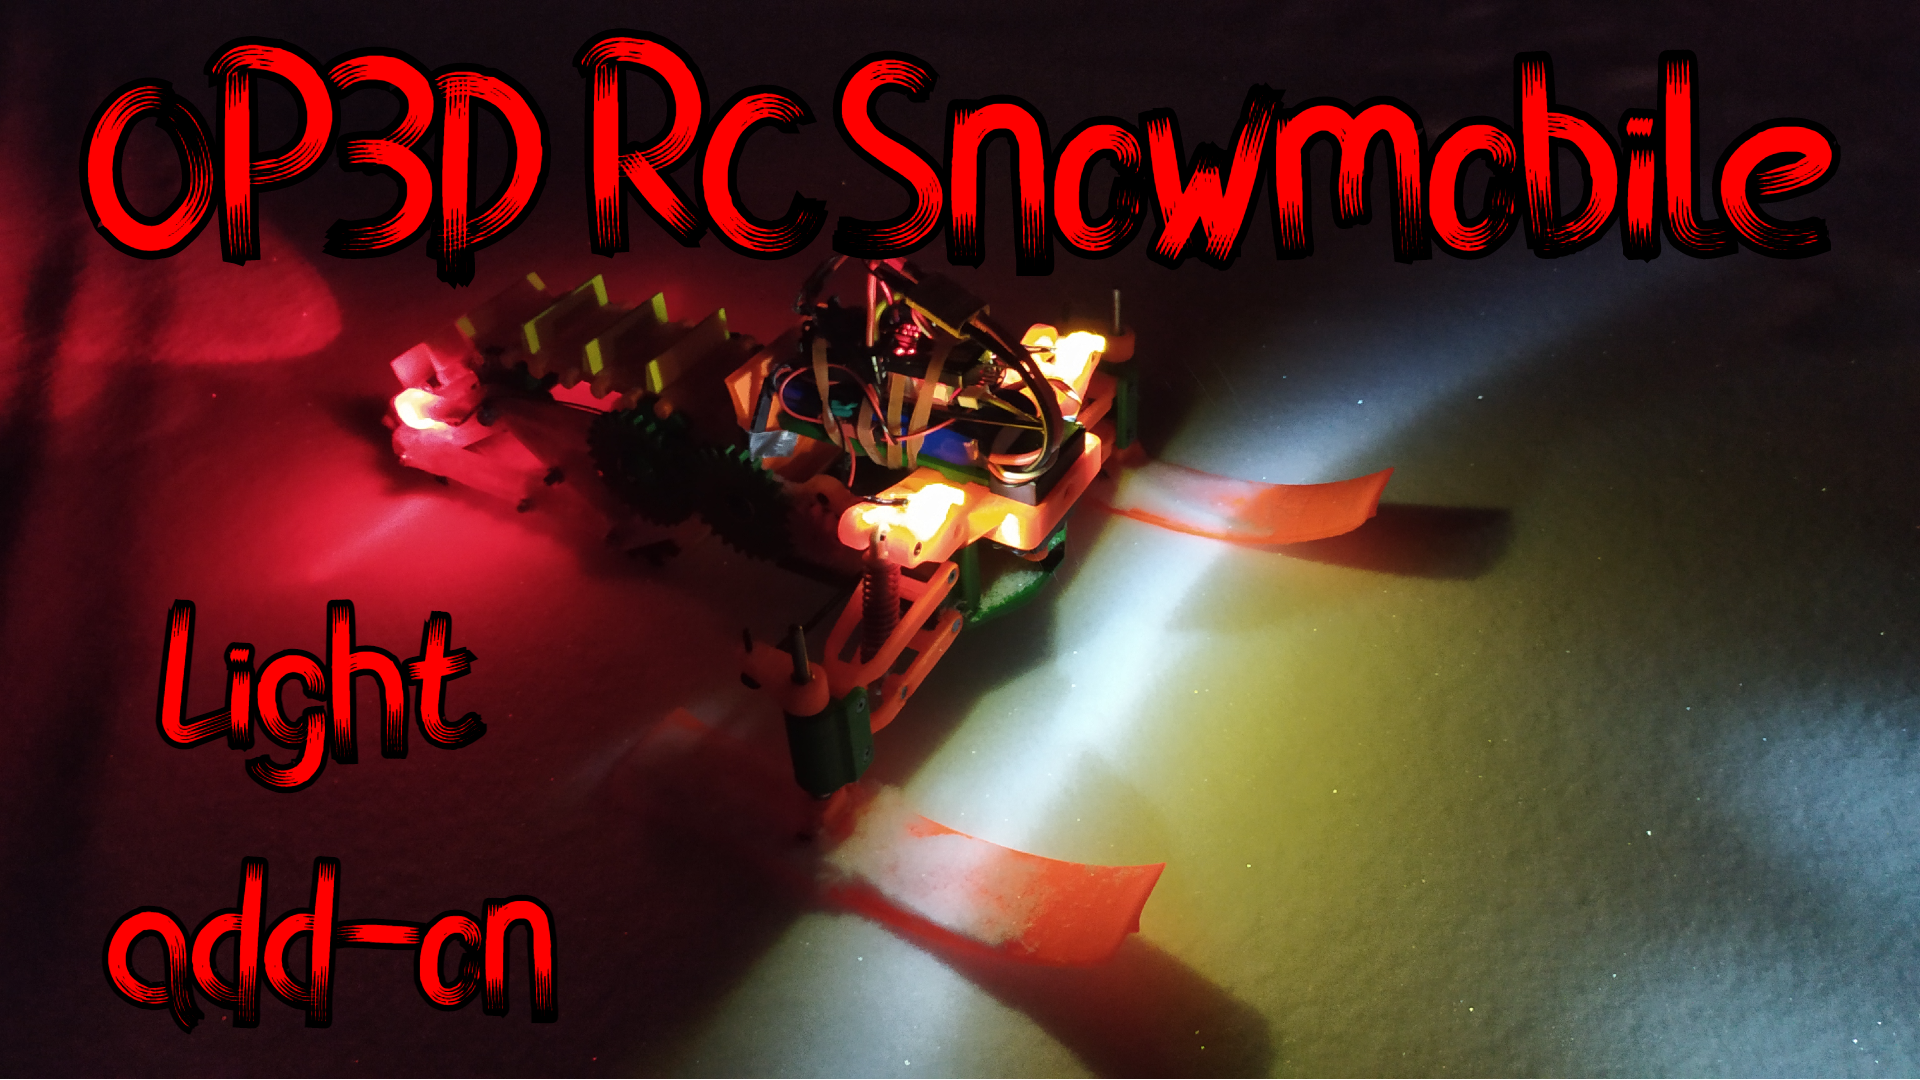 OP3D RC Snowmobile light add-on